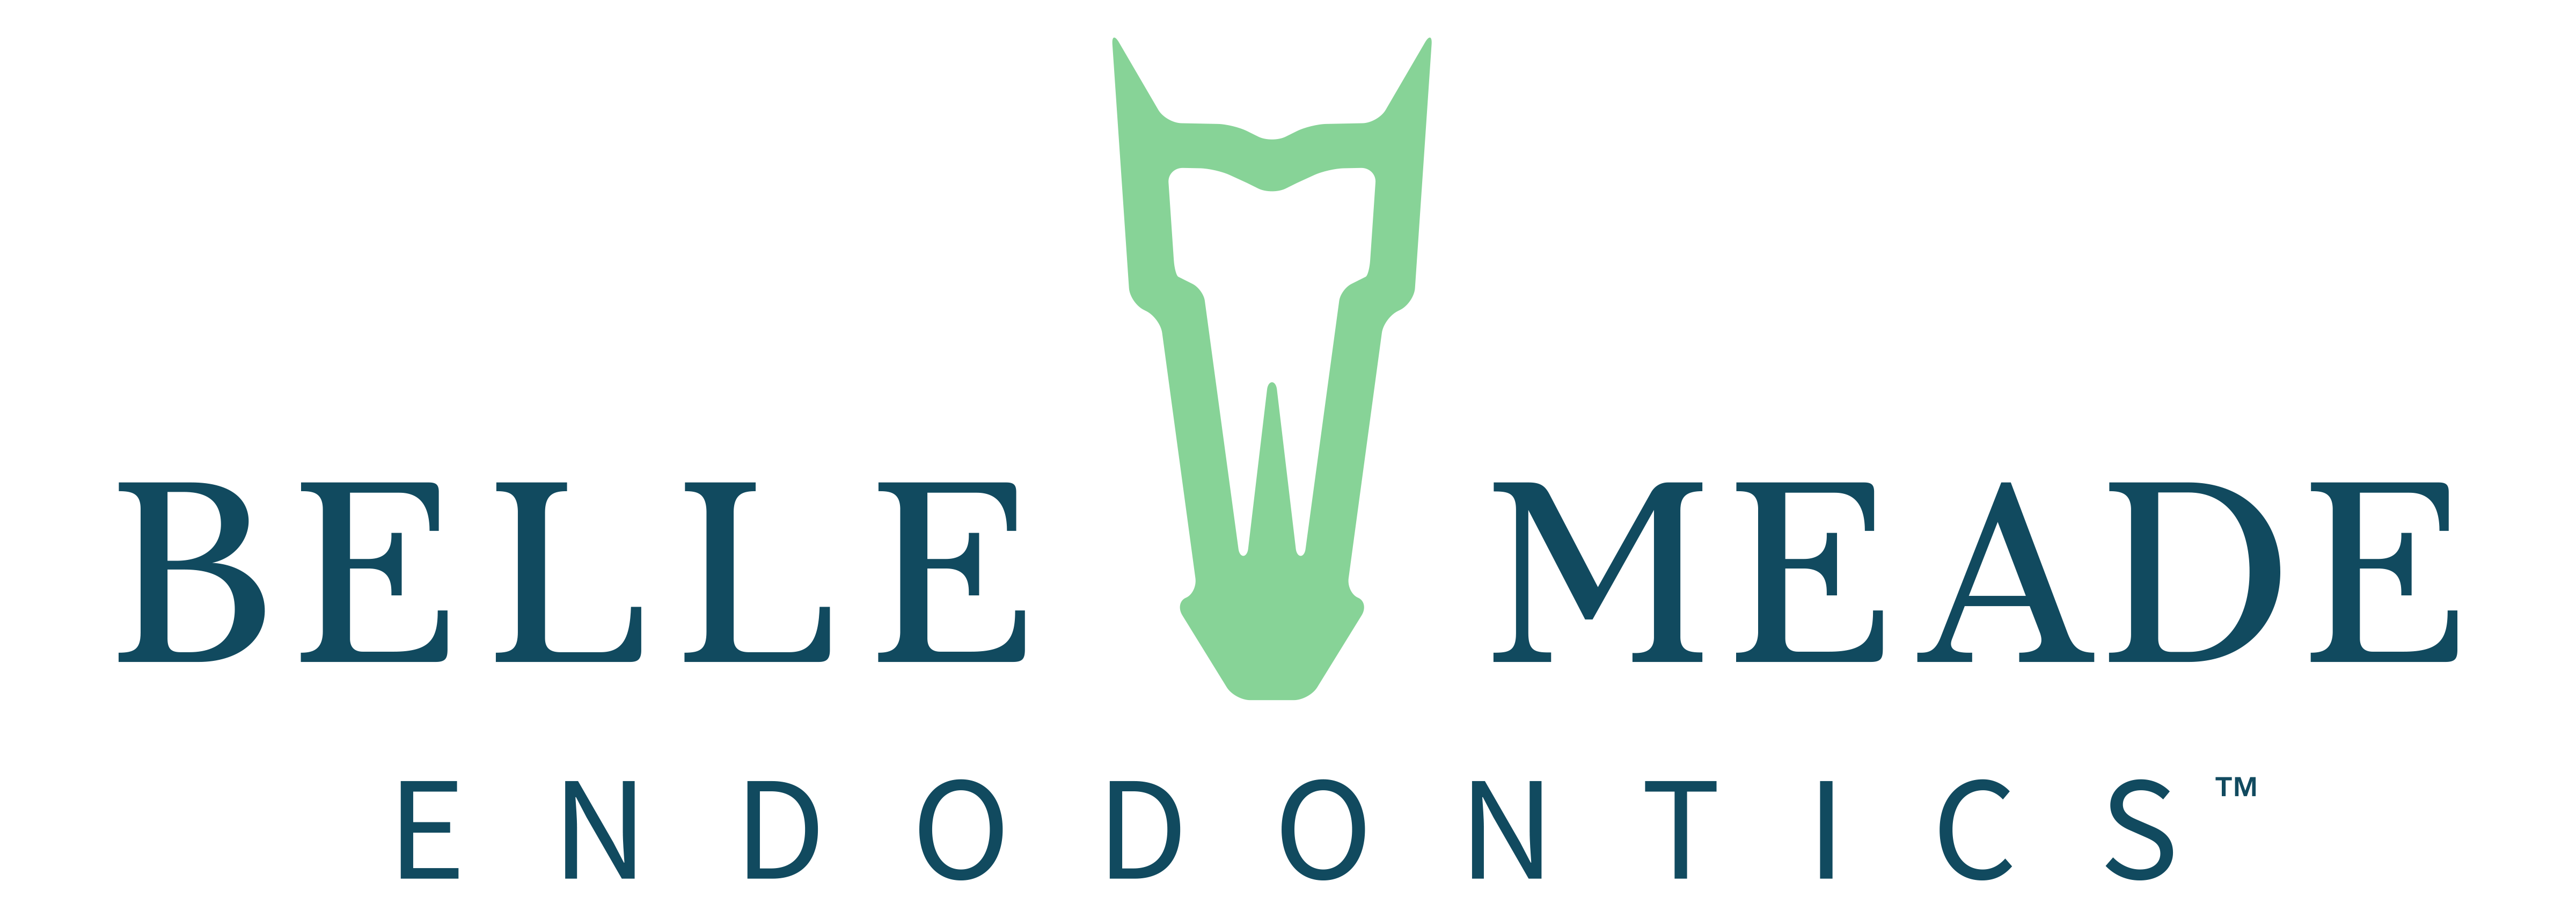 Belle Meade Endodontics